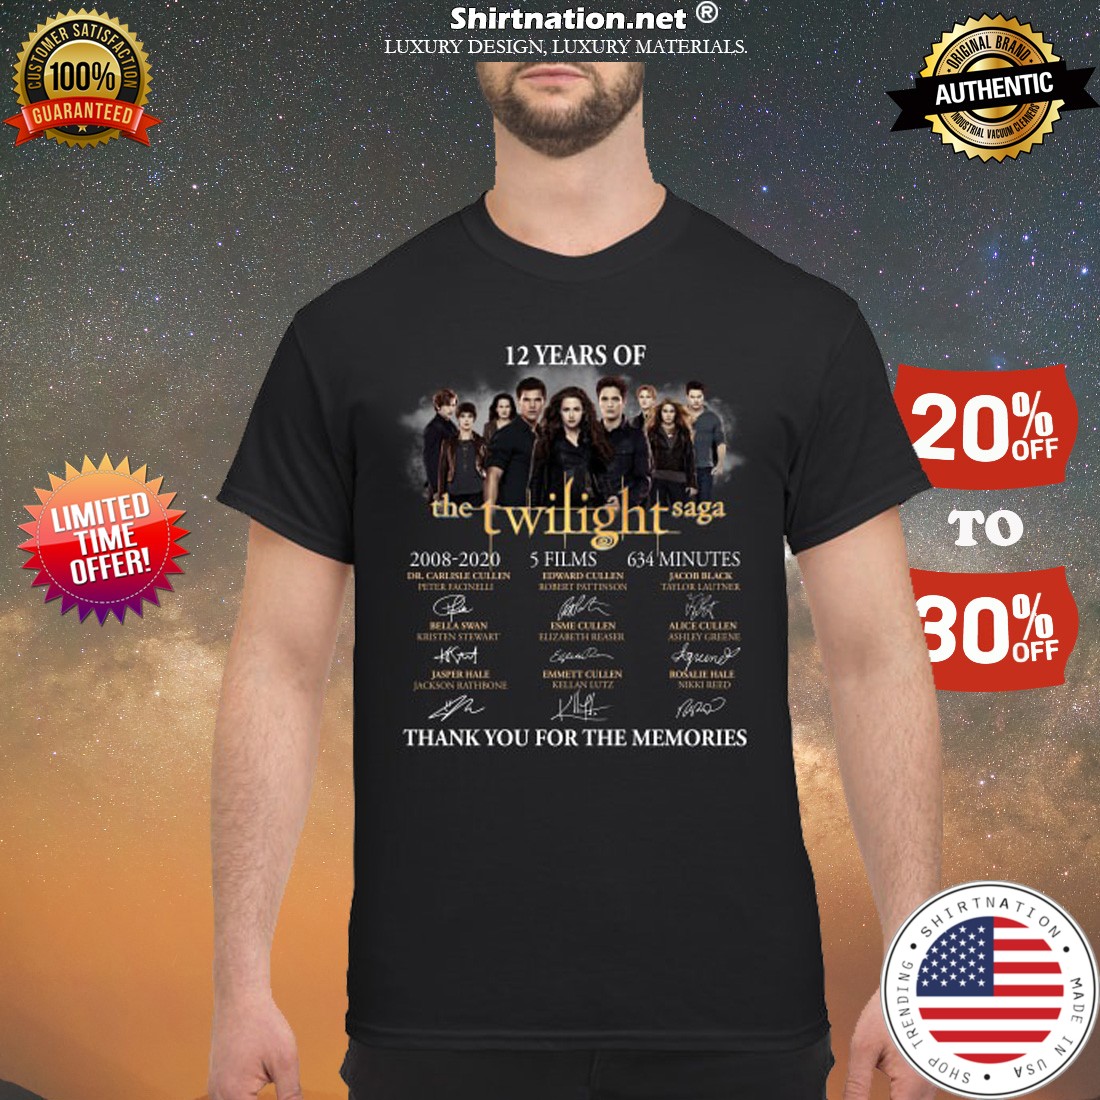 12 years of the Twilight saga shirt